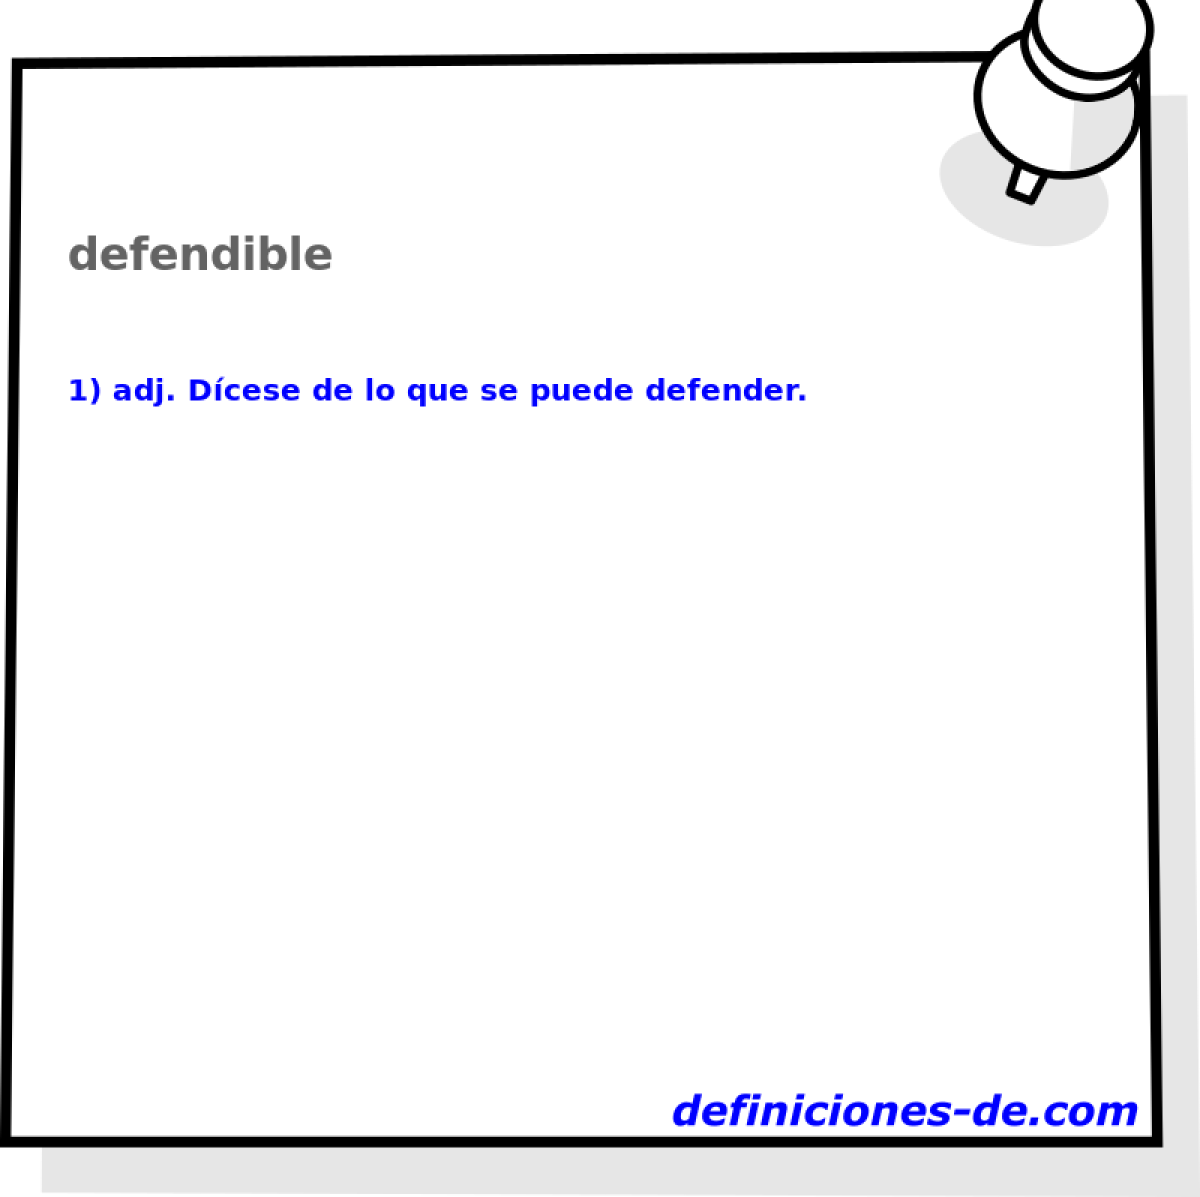 defendible 